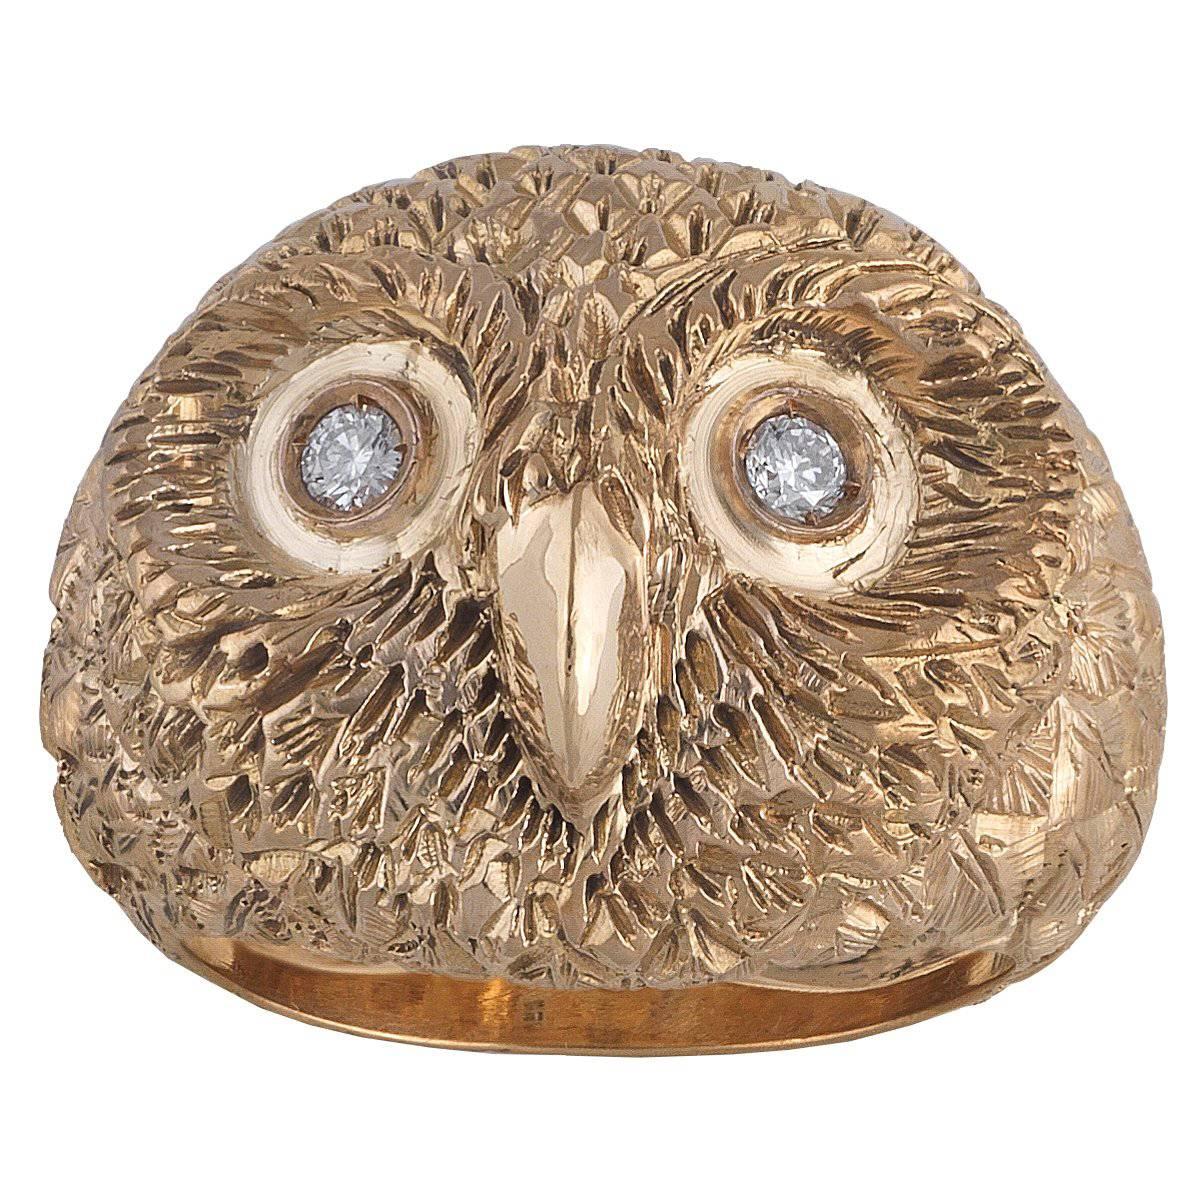 Designed as a owl with diamond set eyes.
Size: 7